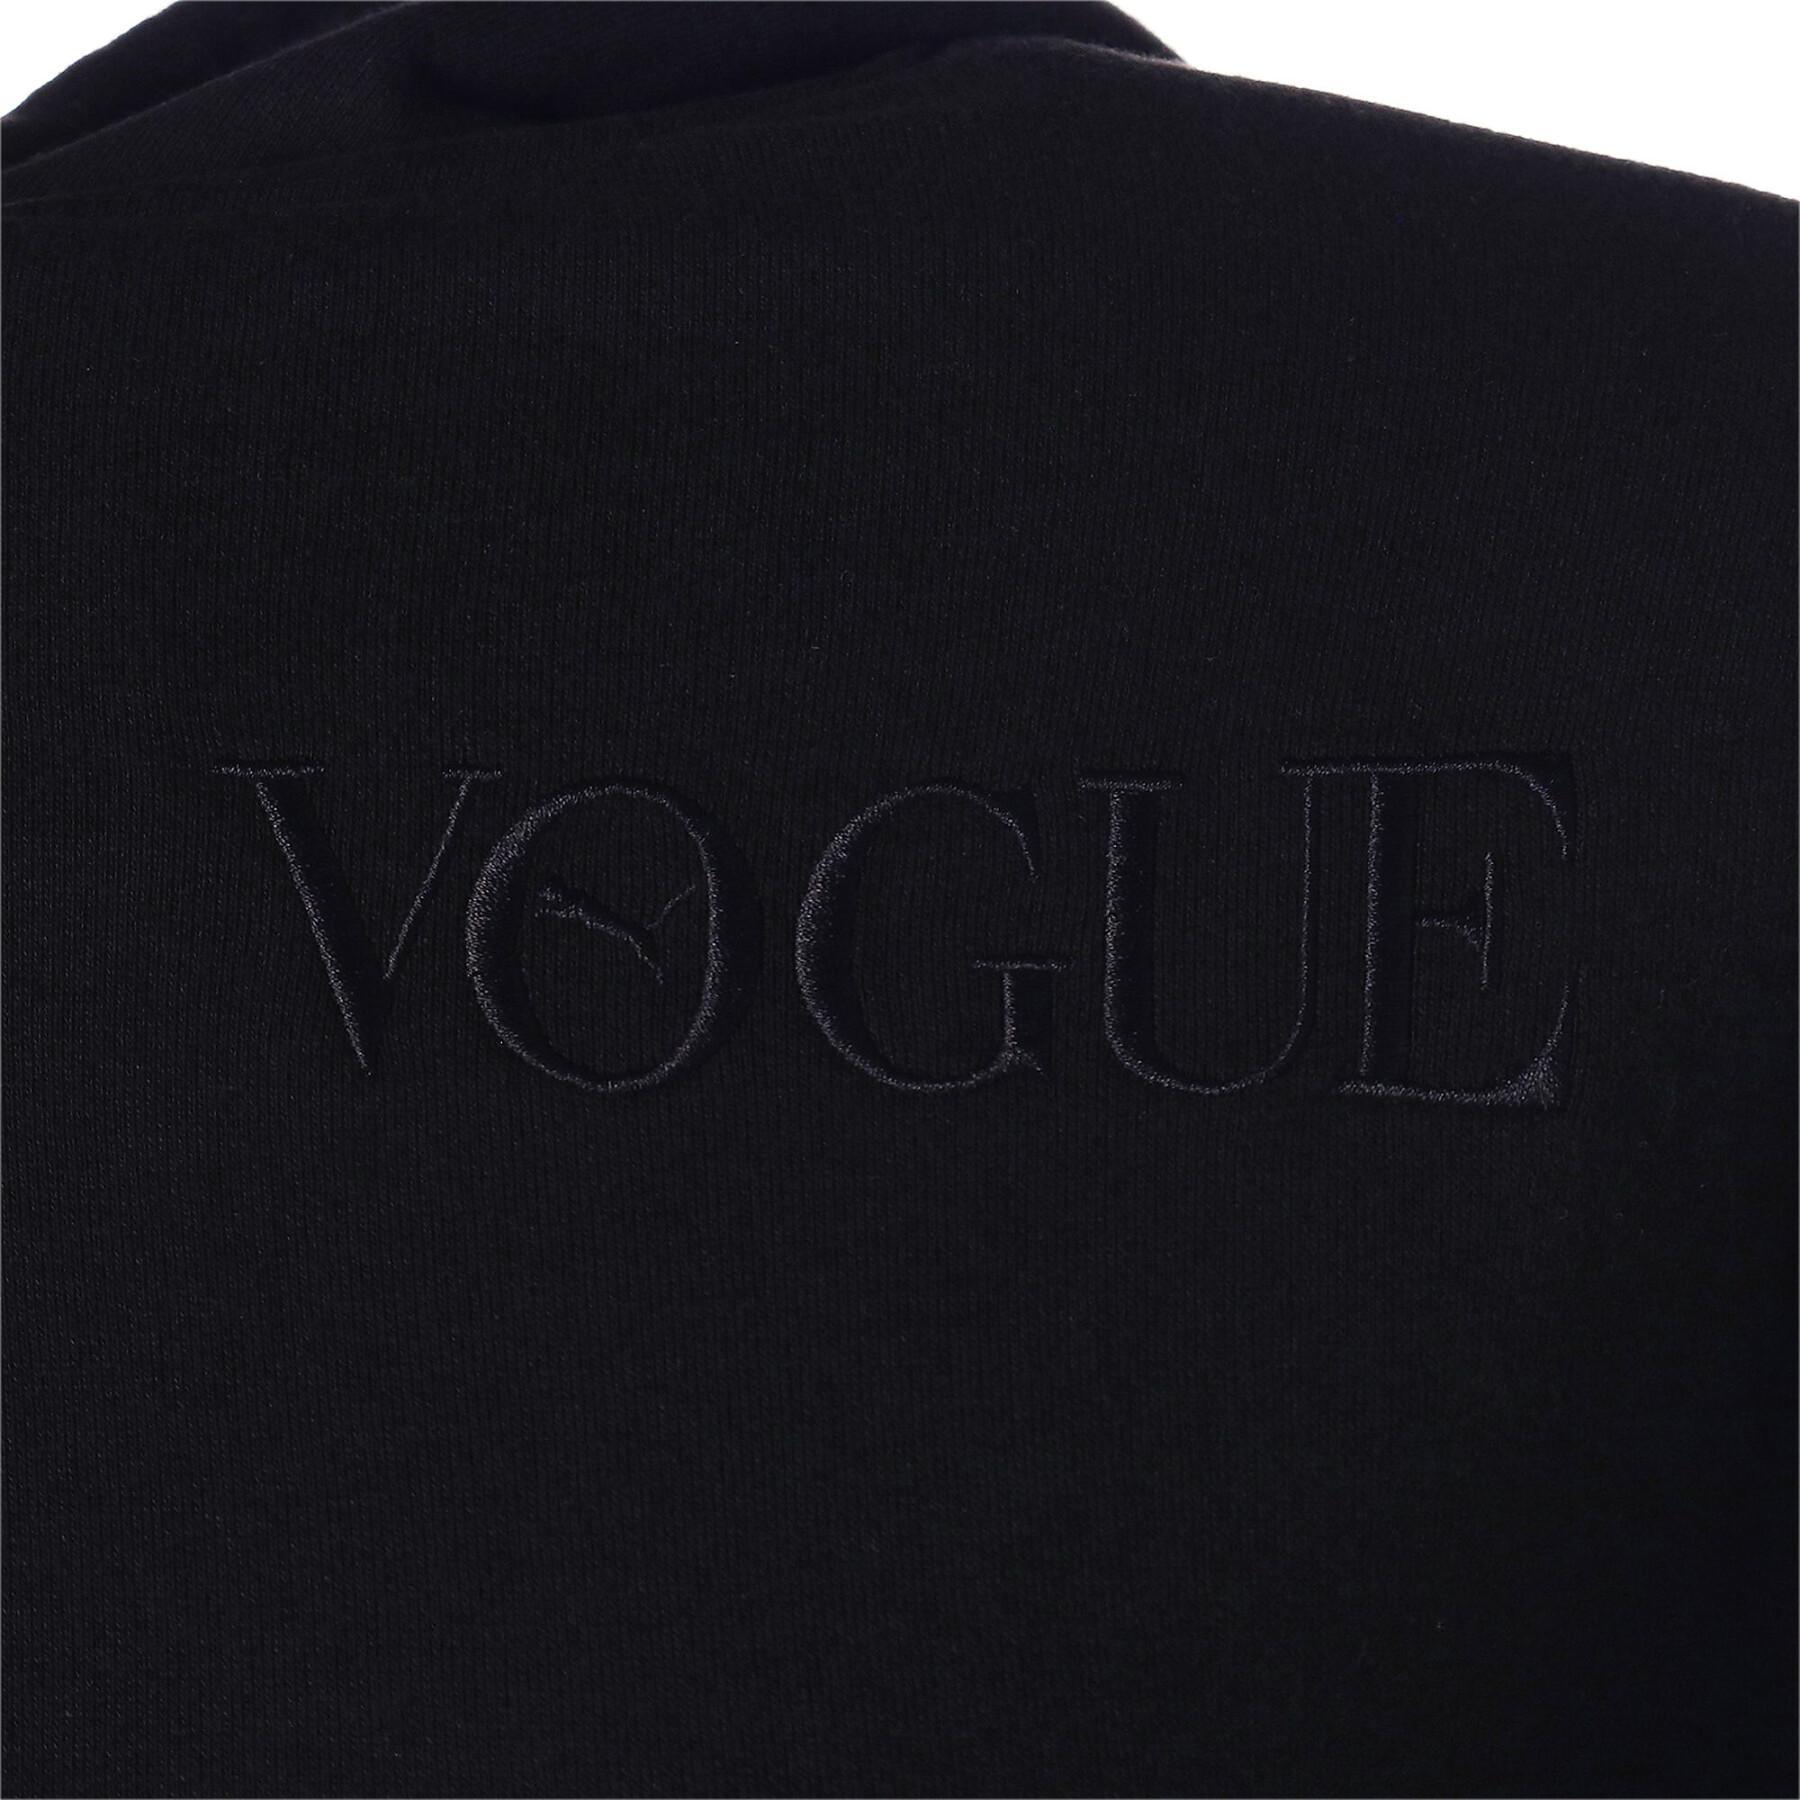 Sweat sudadera con capucha para mujer Puma X Vogue Tr